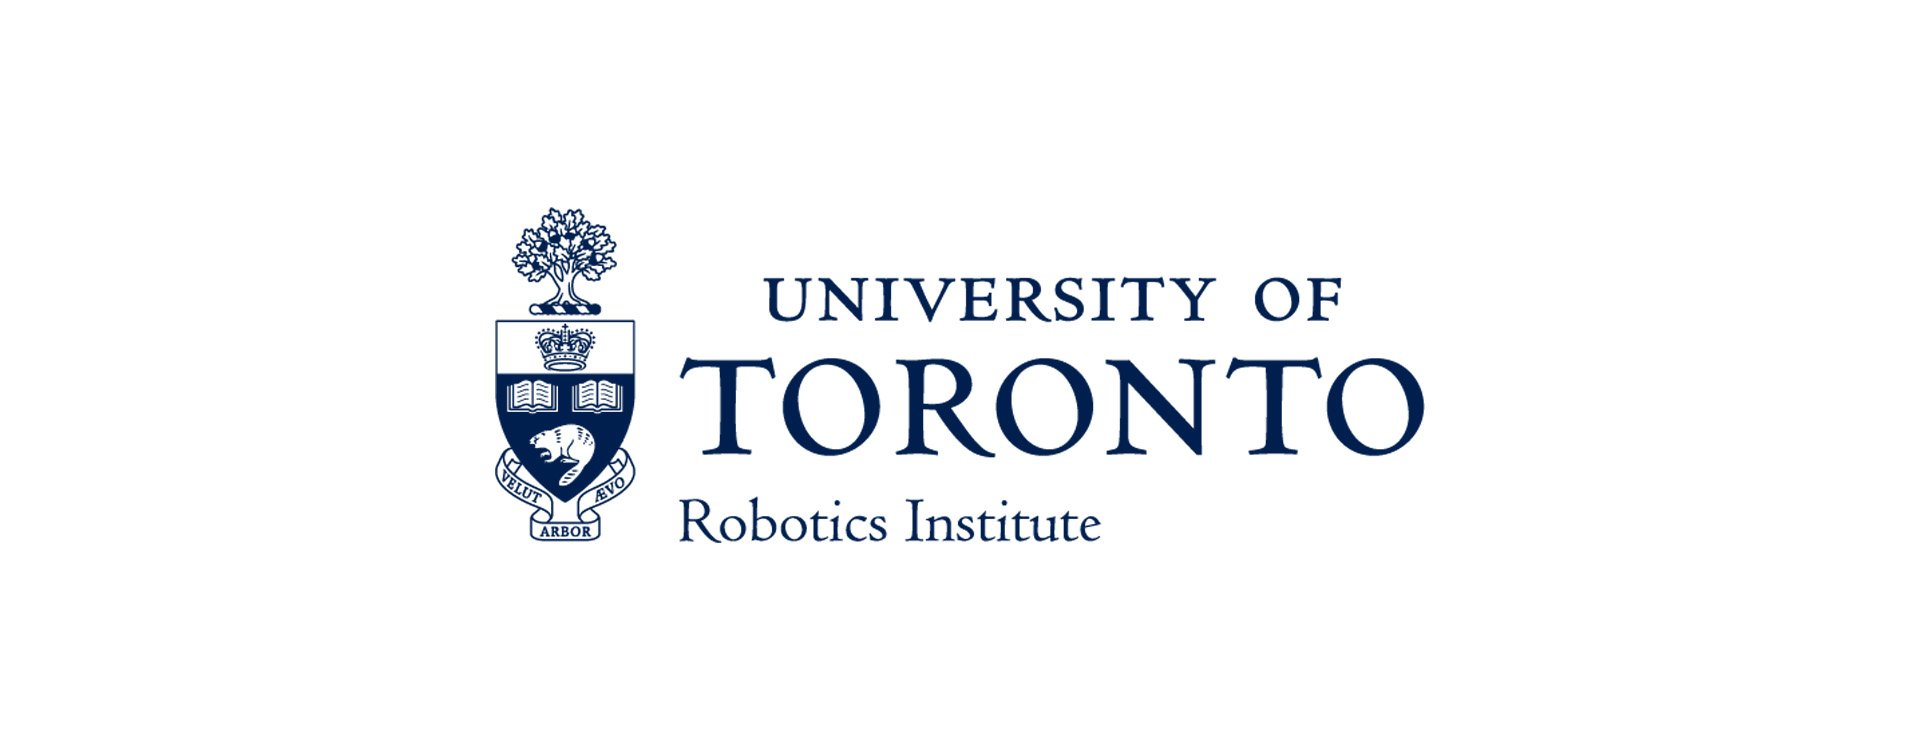 University of Toronto Robotics Institute logo